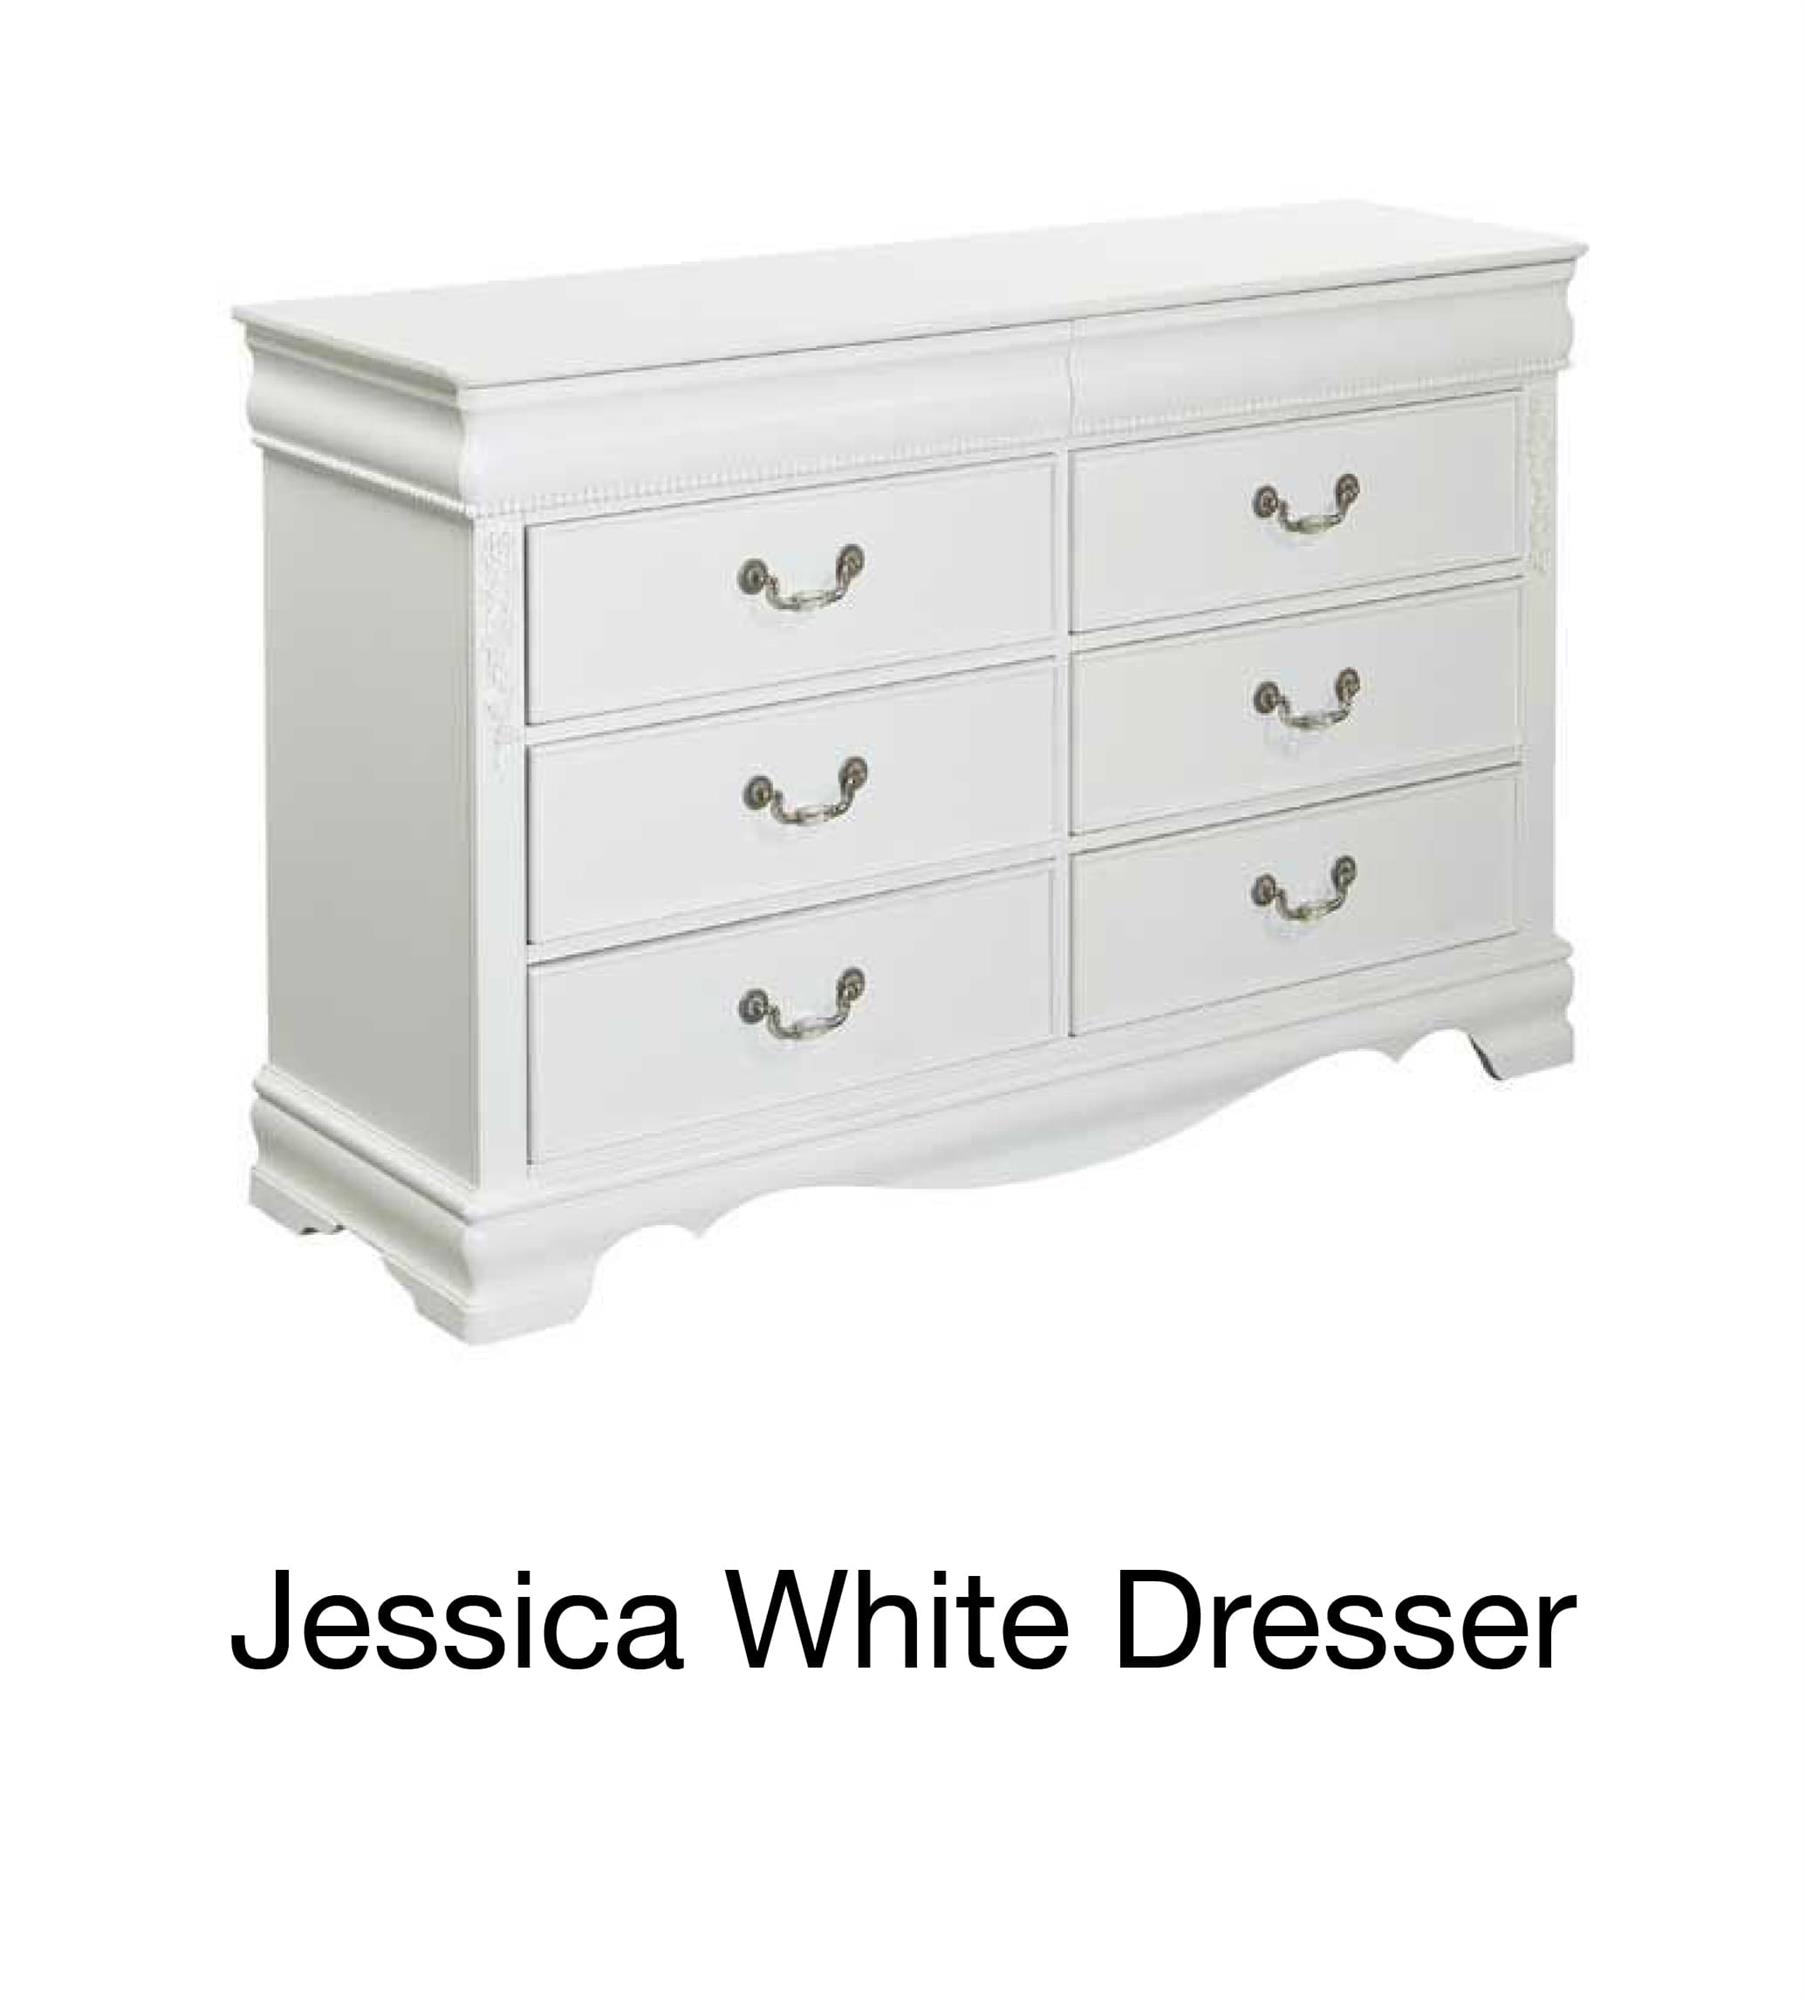 Jessica White Dresser